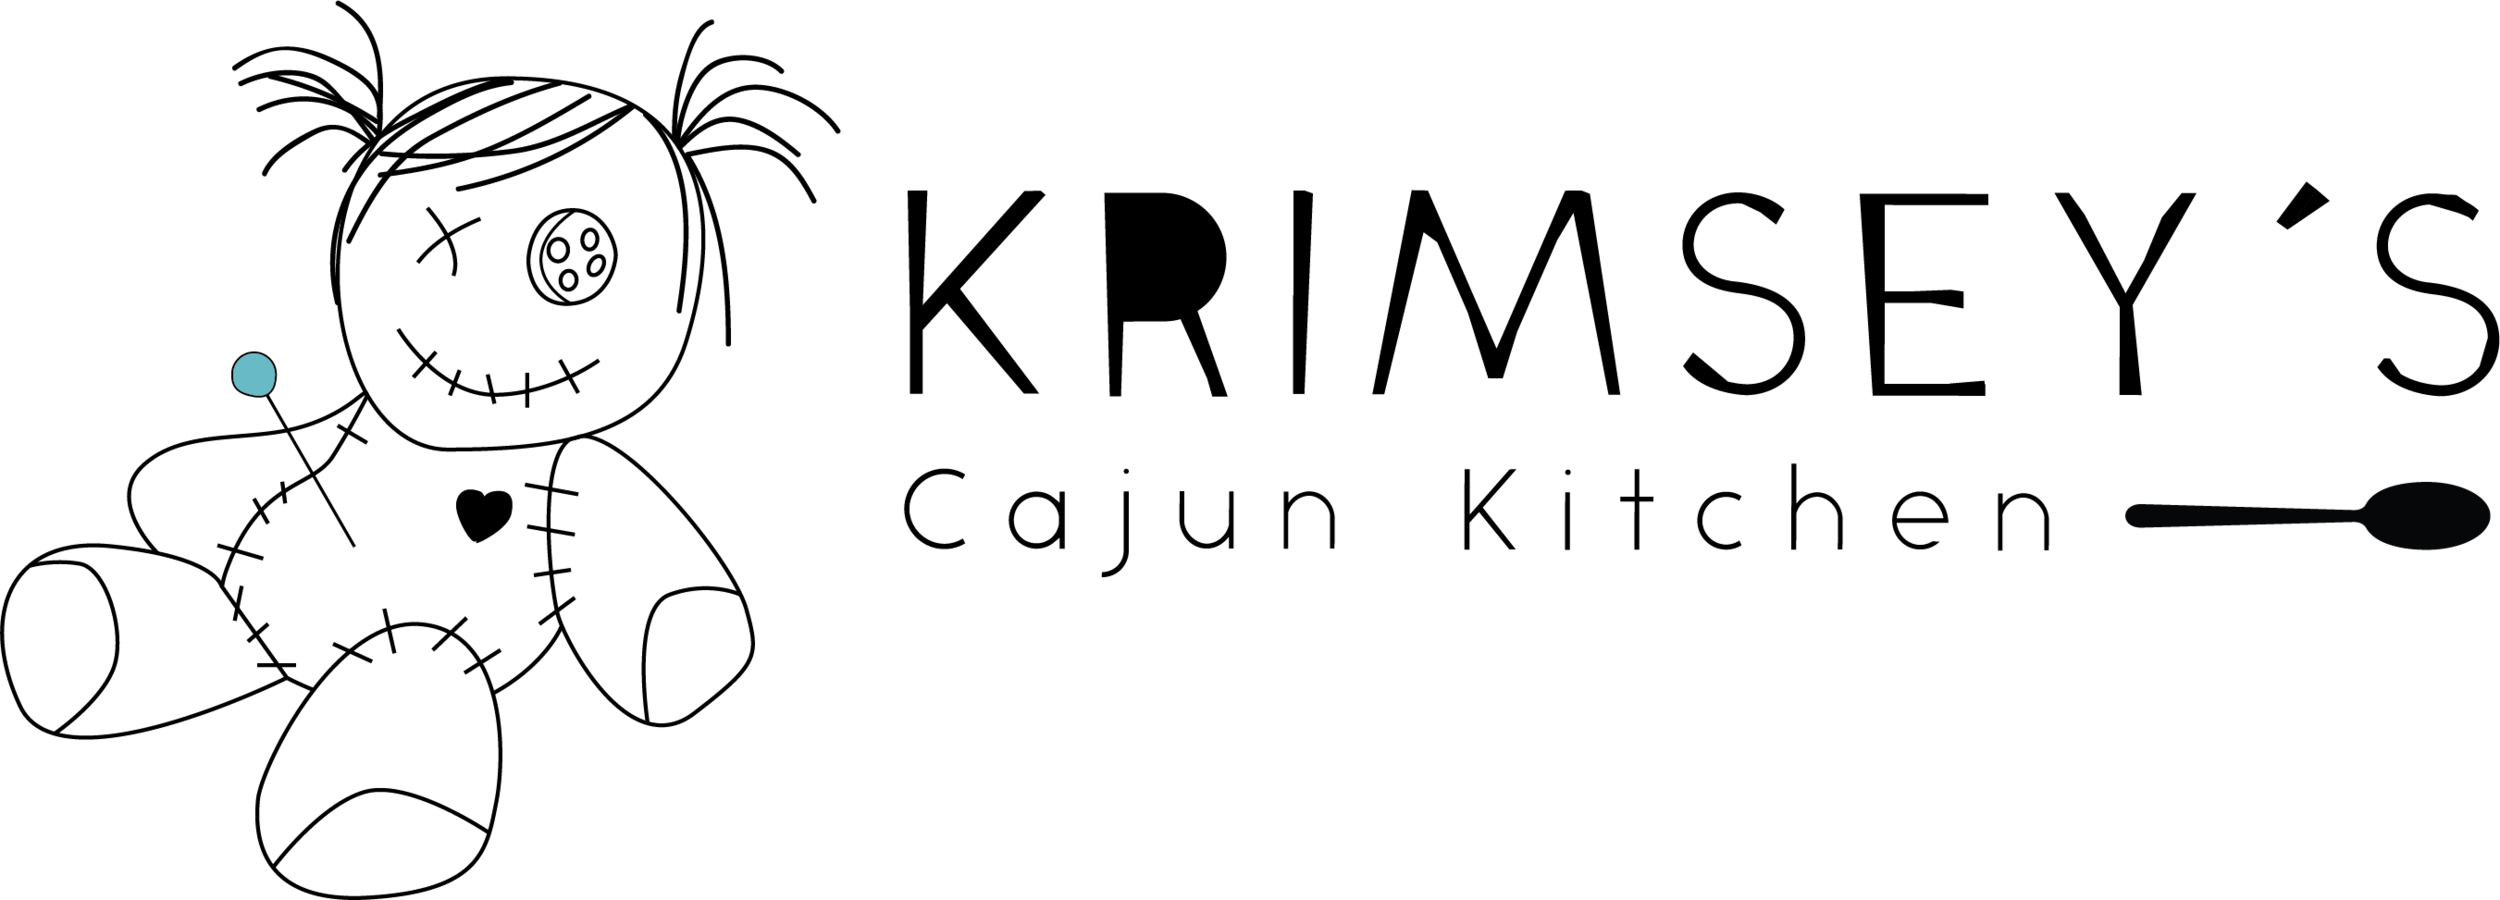 Krimseys logo black.png